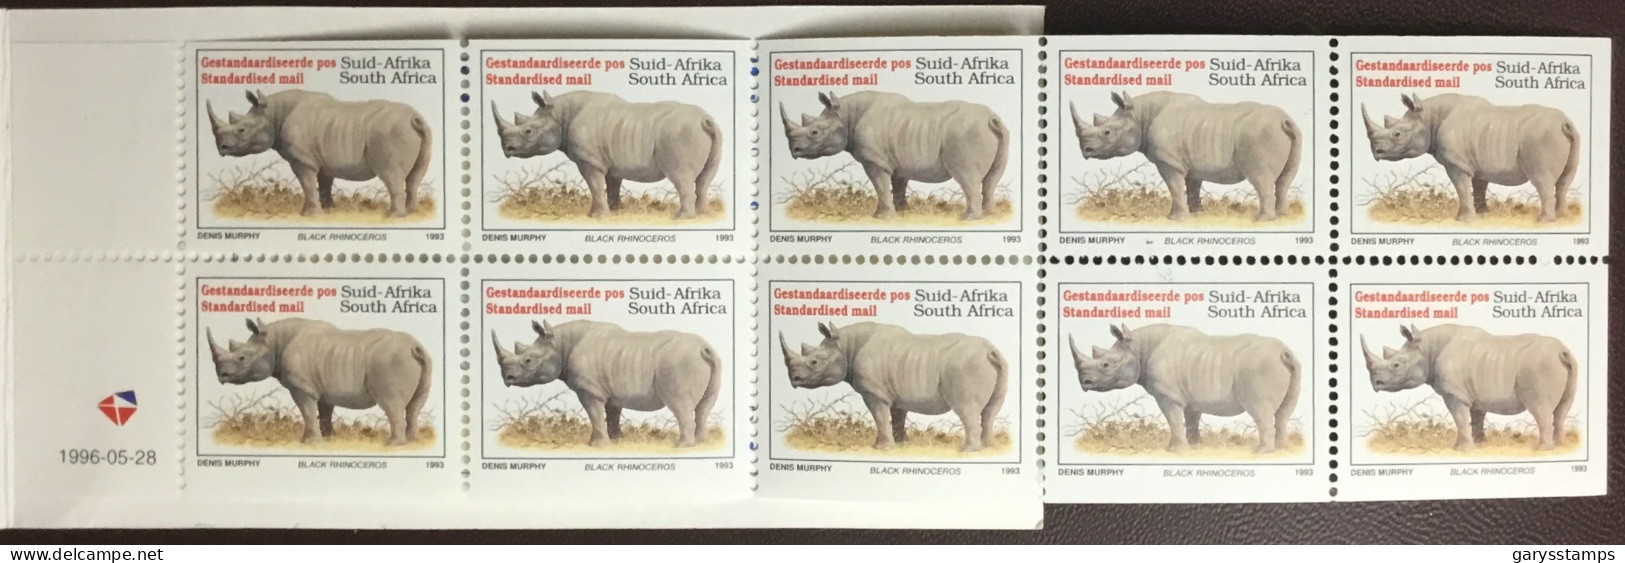 South Africa 1995 Standardised Mail Rhino Animals Booklet Unused - Rinocerontes